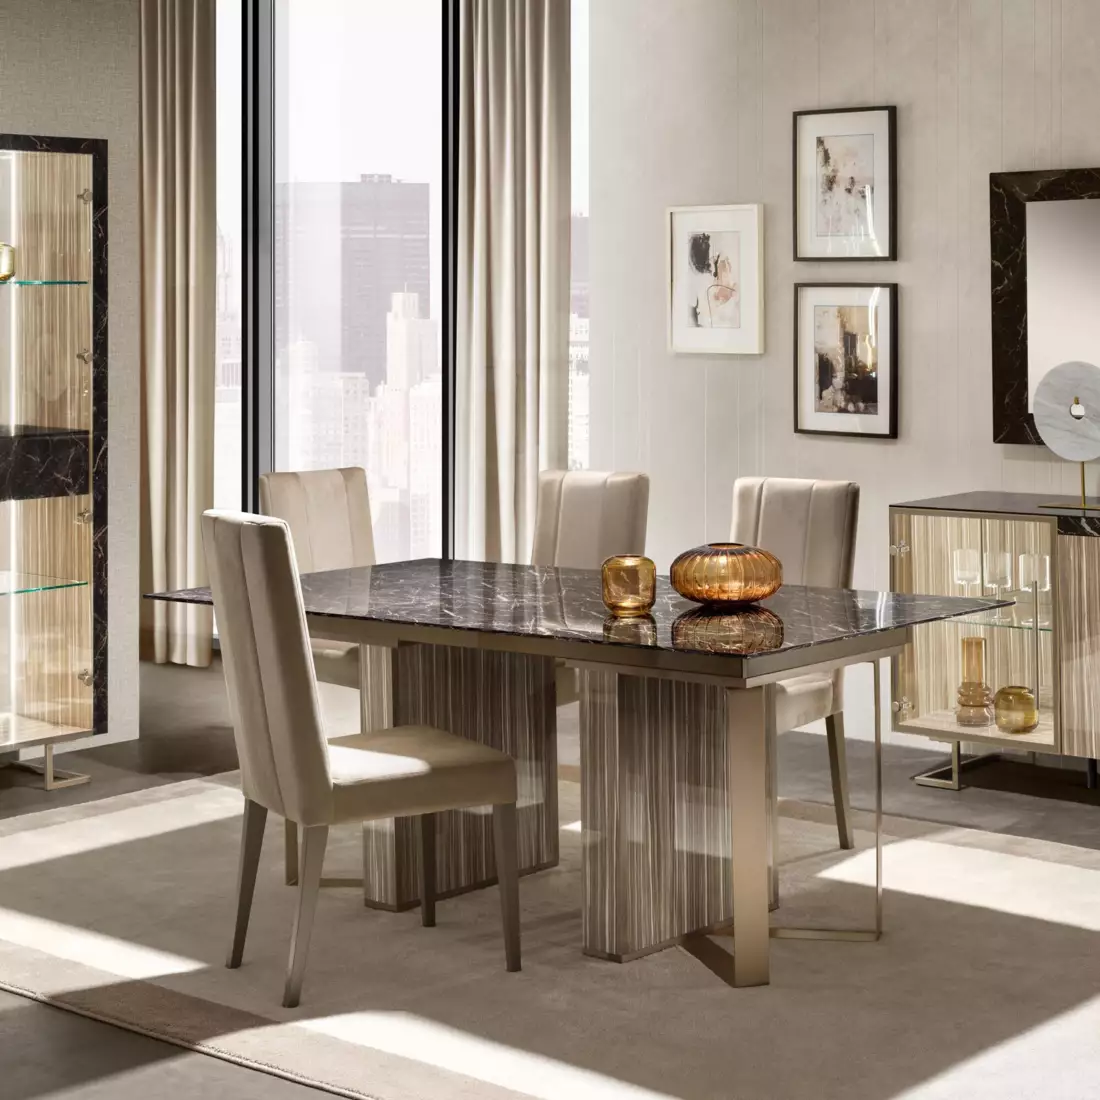 Adora-Luce-Dark-dinig-room-set-with-2-doors-glass-cabinet